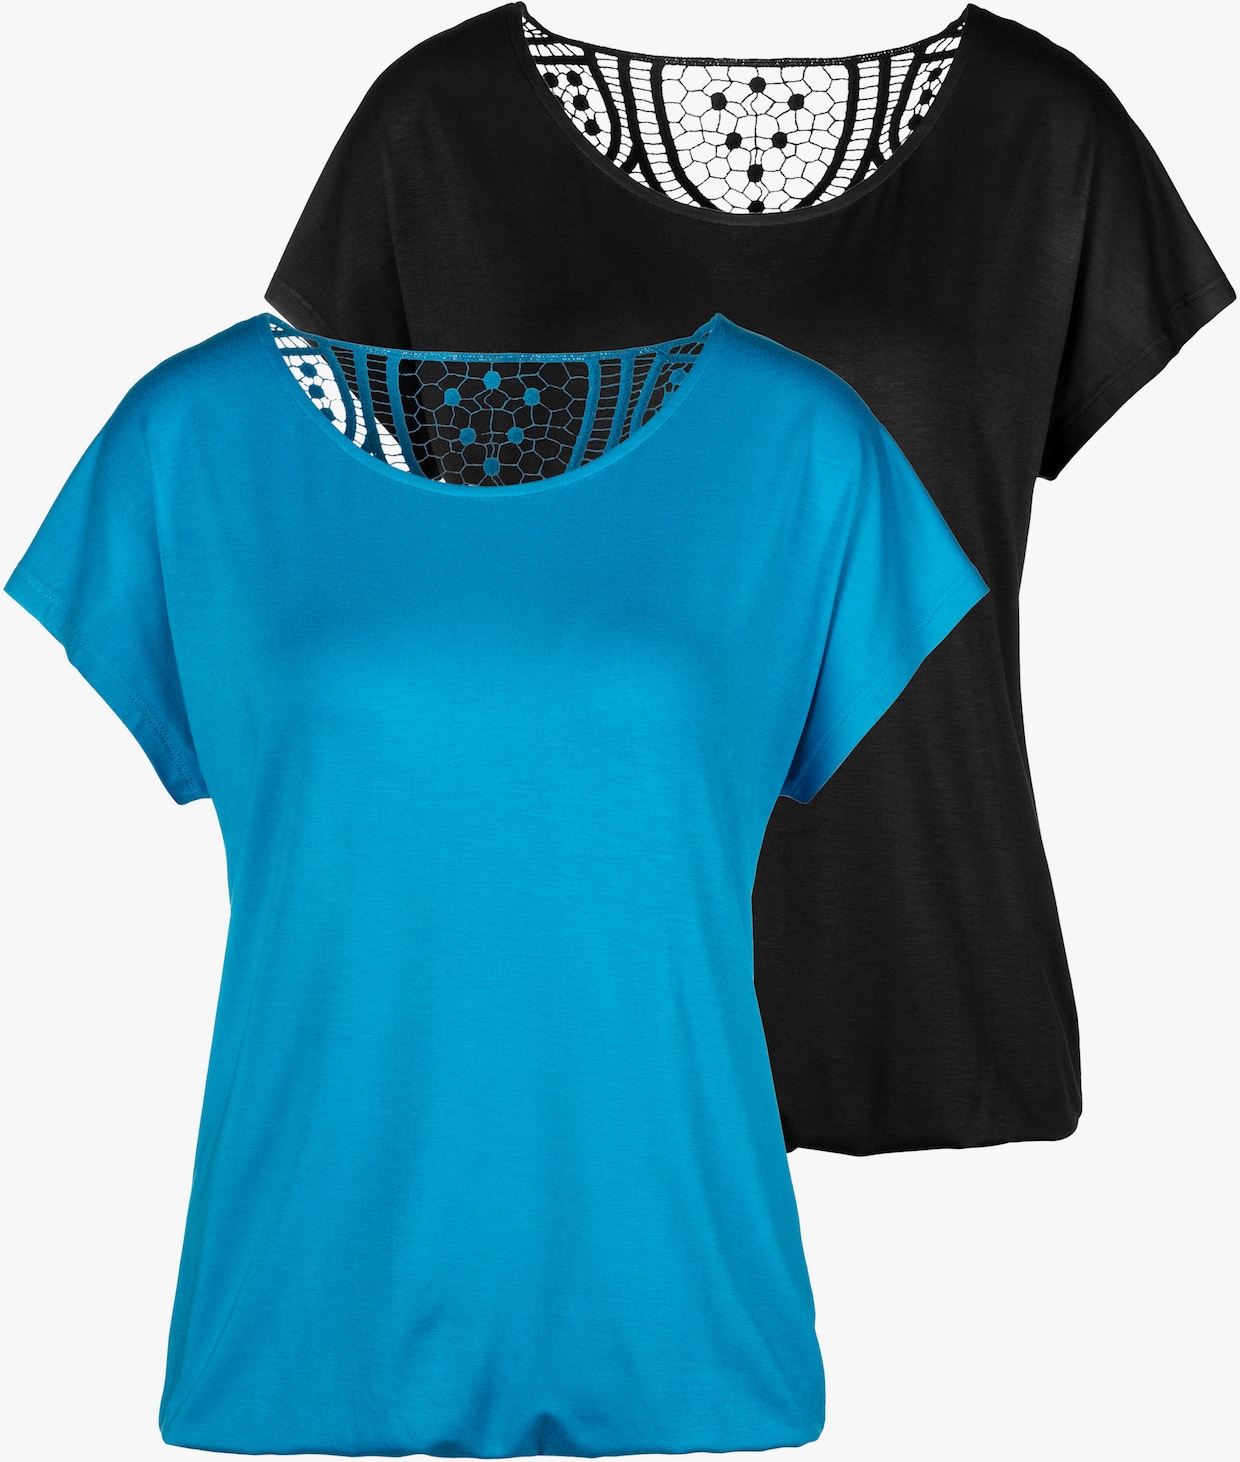 Vivance T-shirt - turquoise, zwart